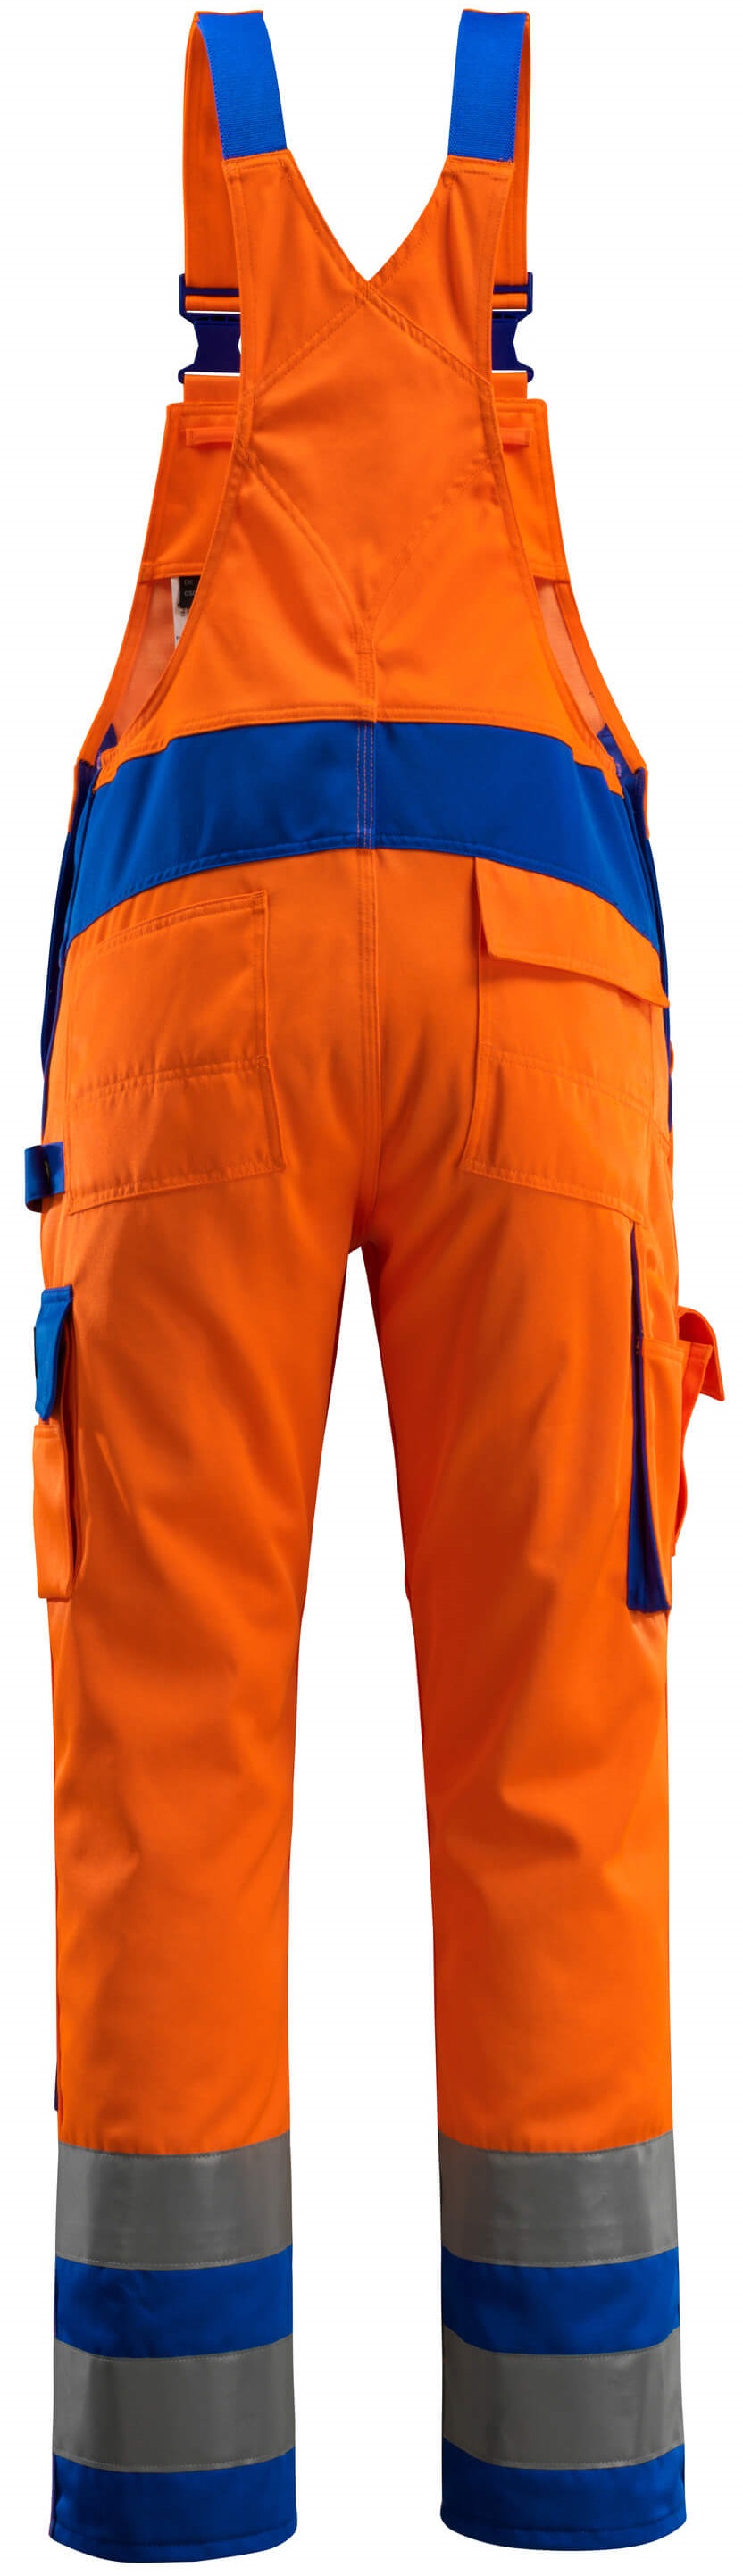 MASCOT-Warnschutz, Warn-Latzhose, Barras, 82 cm, 290 g/m², orange/kornblau
